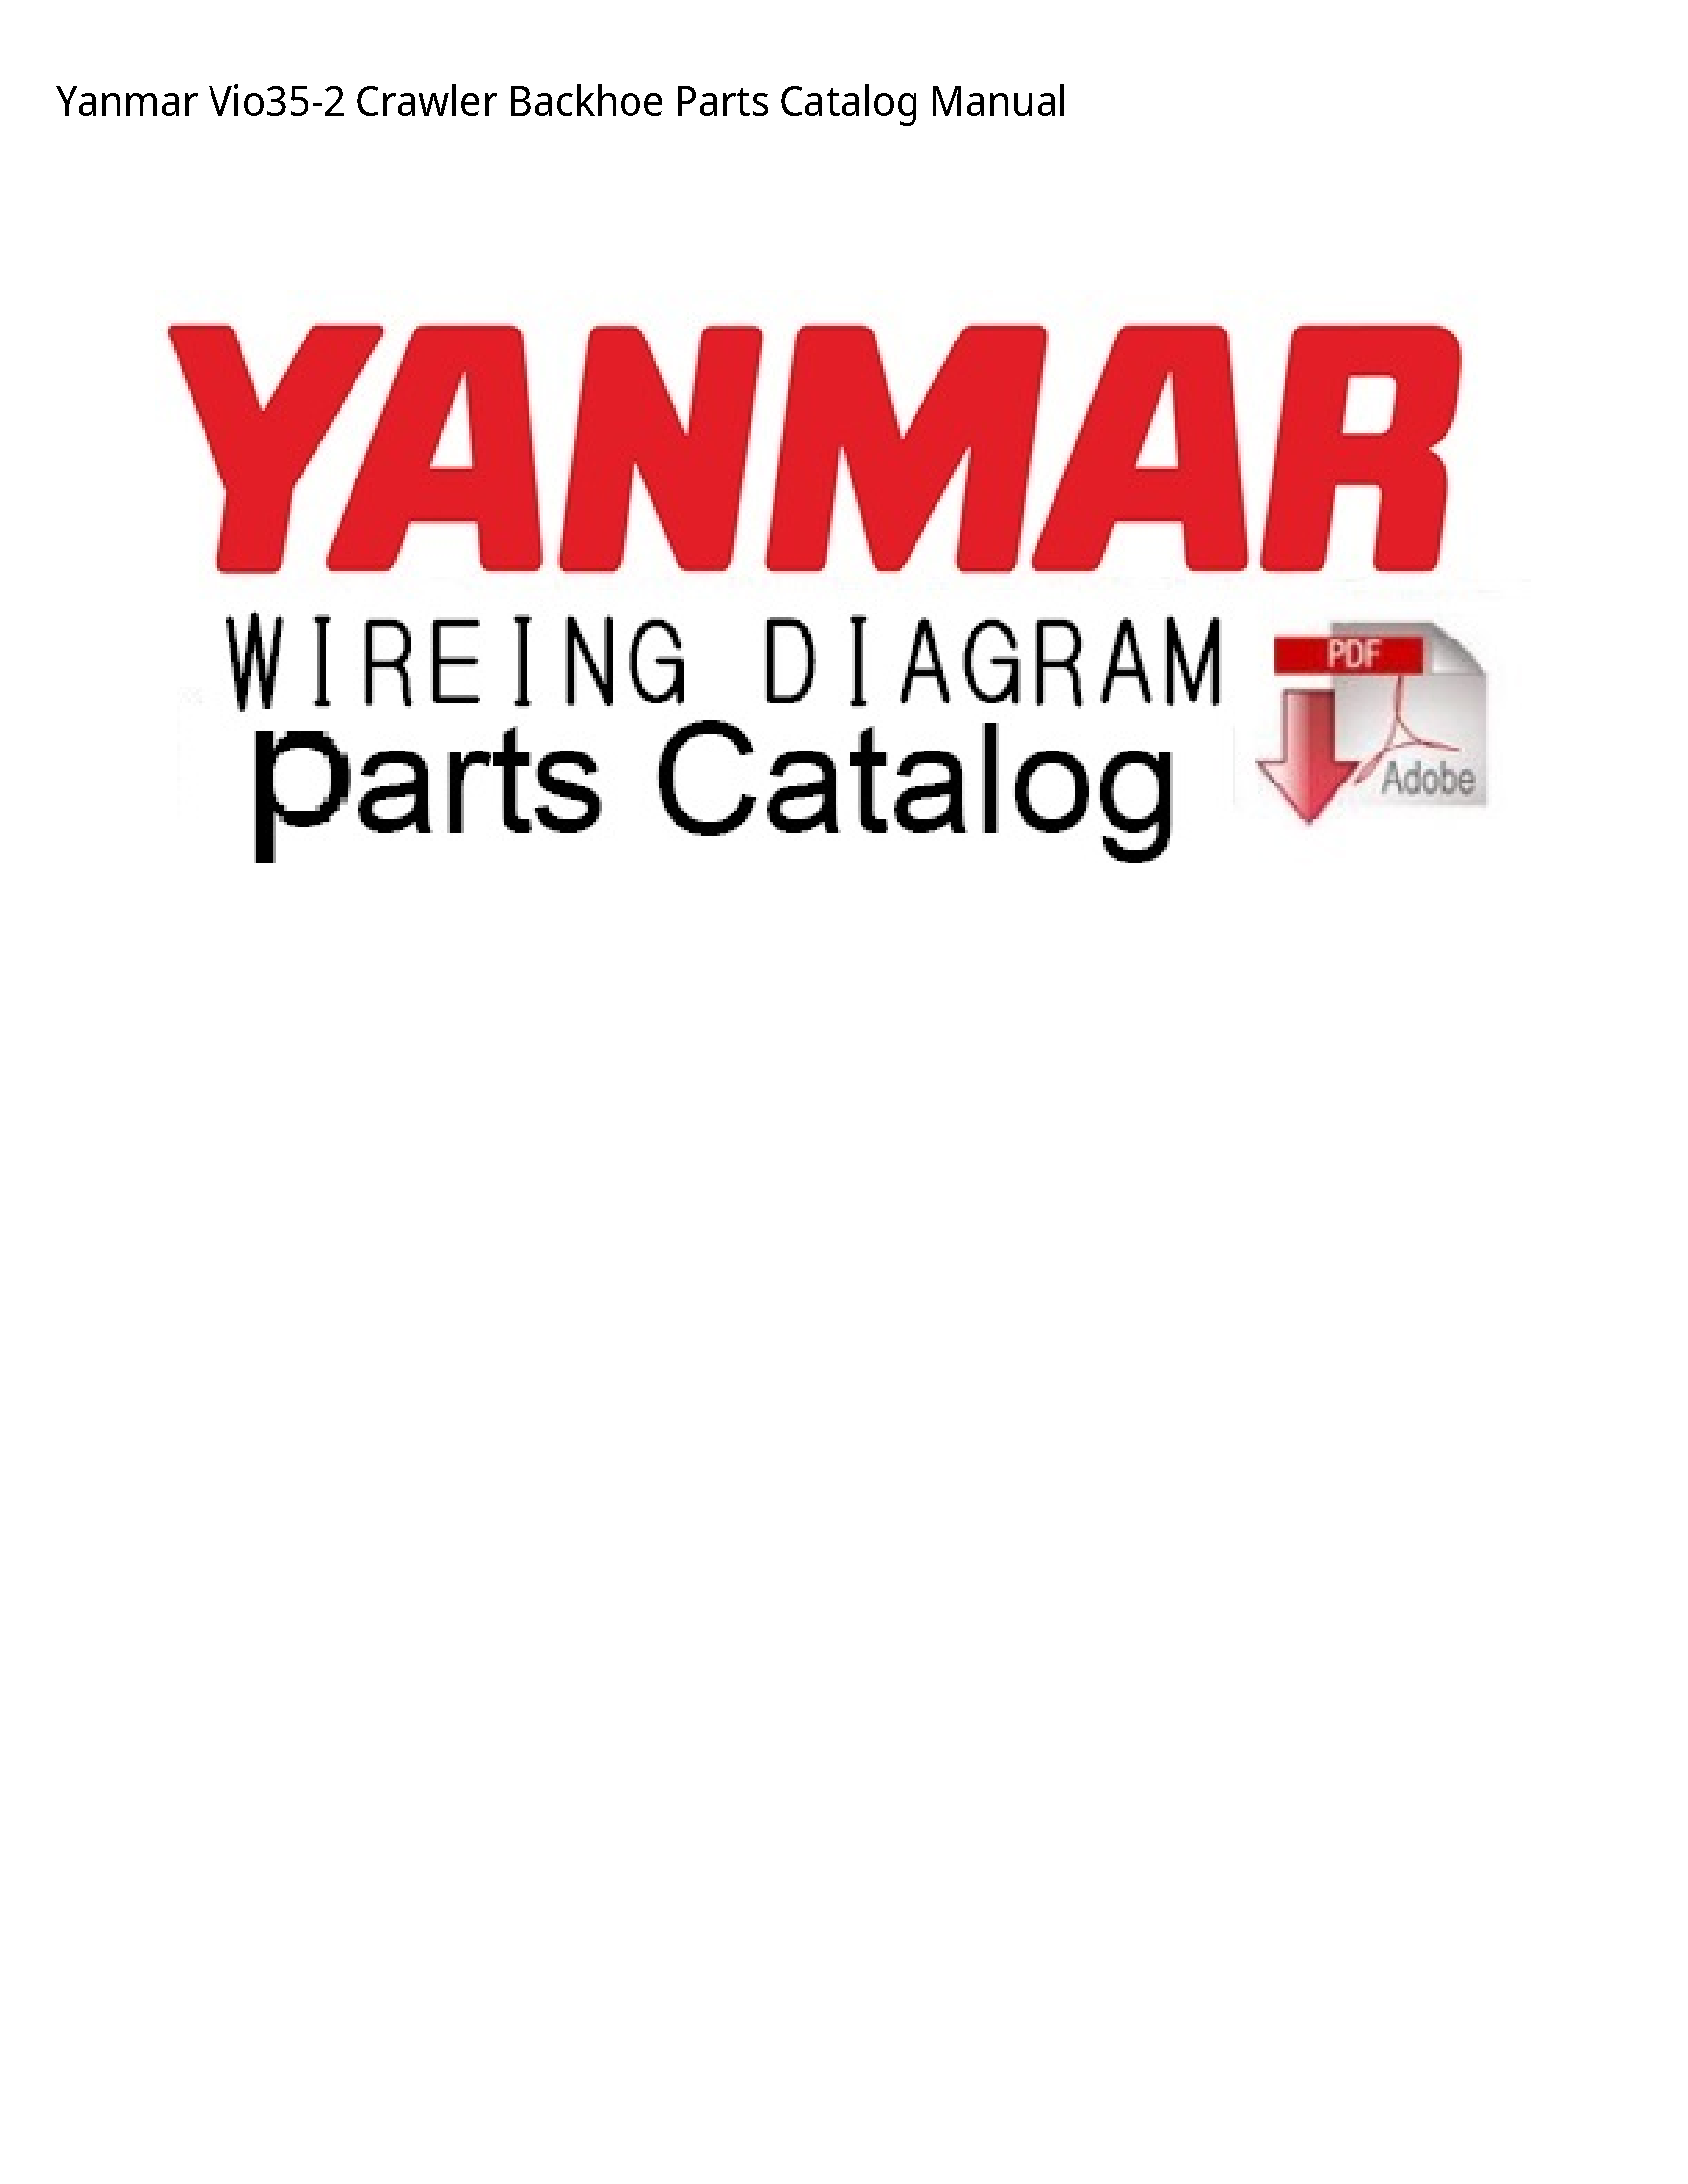 Yanmar Vio35-2 Crawler Backhoe Parts Catalog manual